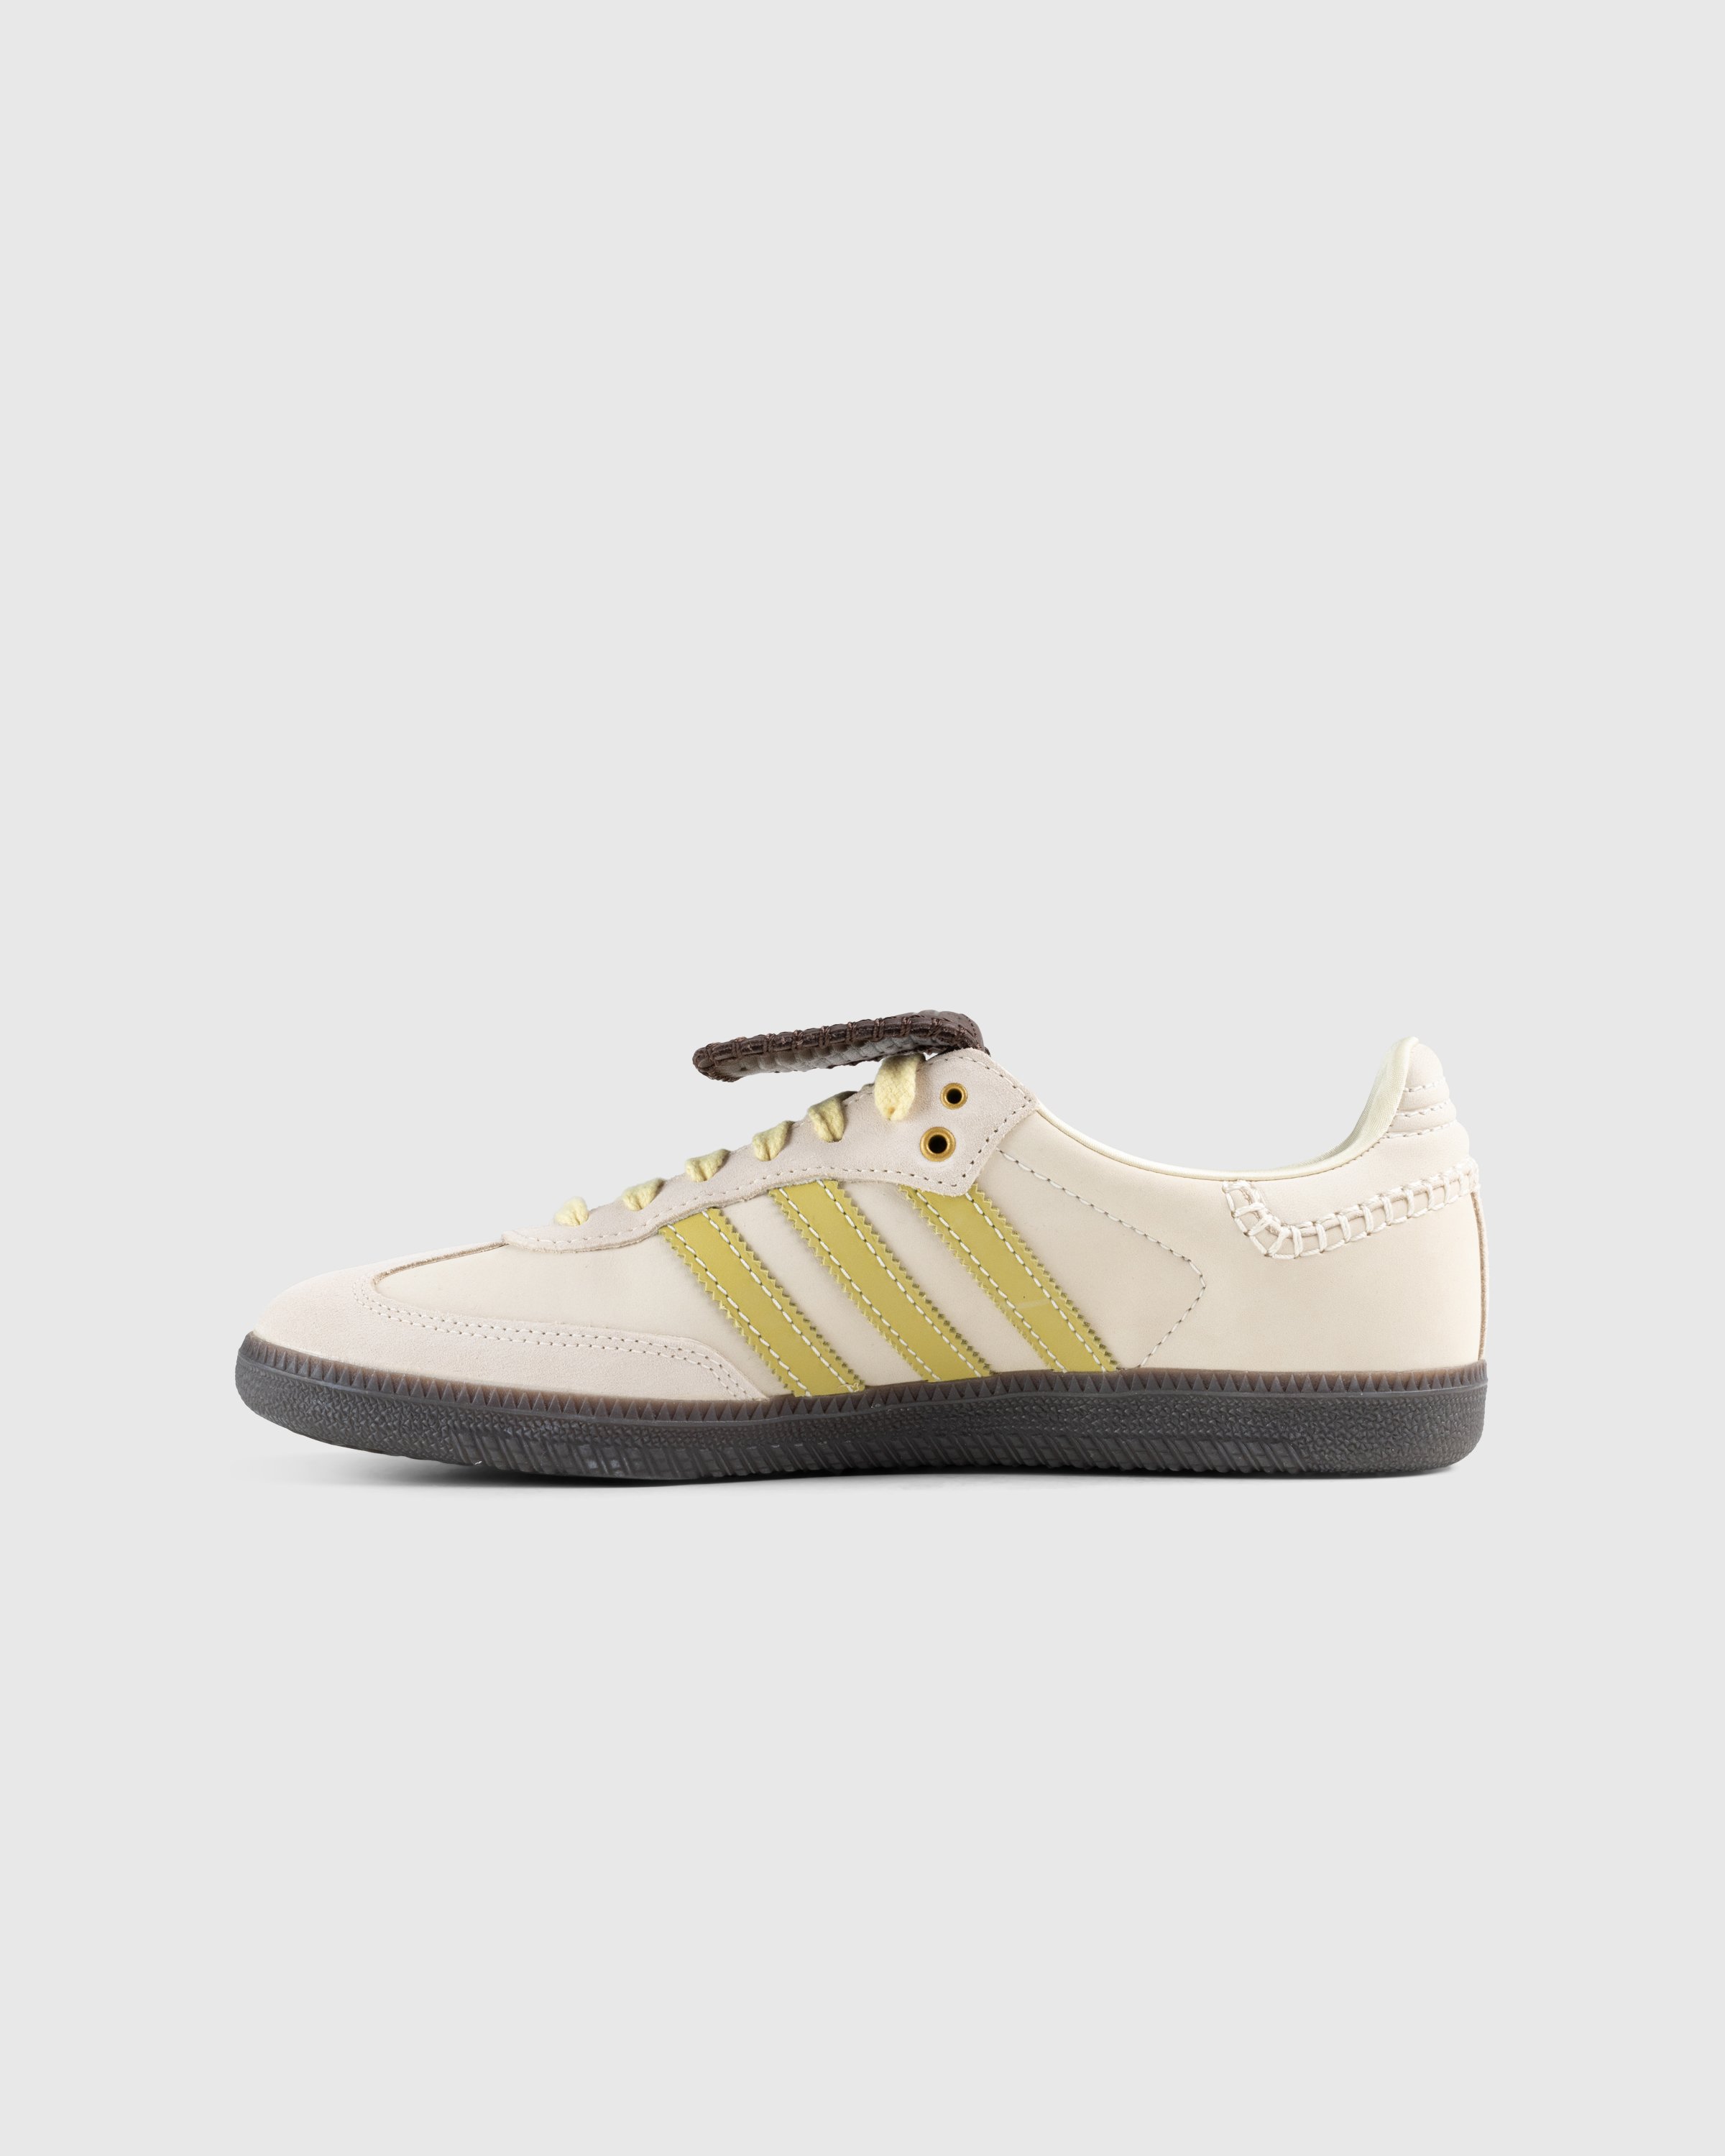 Adidas x Wales Bonner - Samba Nubuck Ecru Tint/Almost Yellow/Dark Brown - Footwear - Beige - Image 2